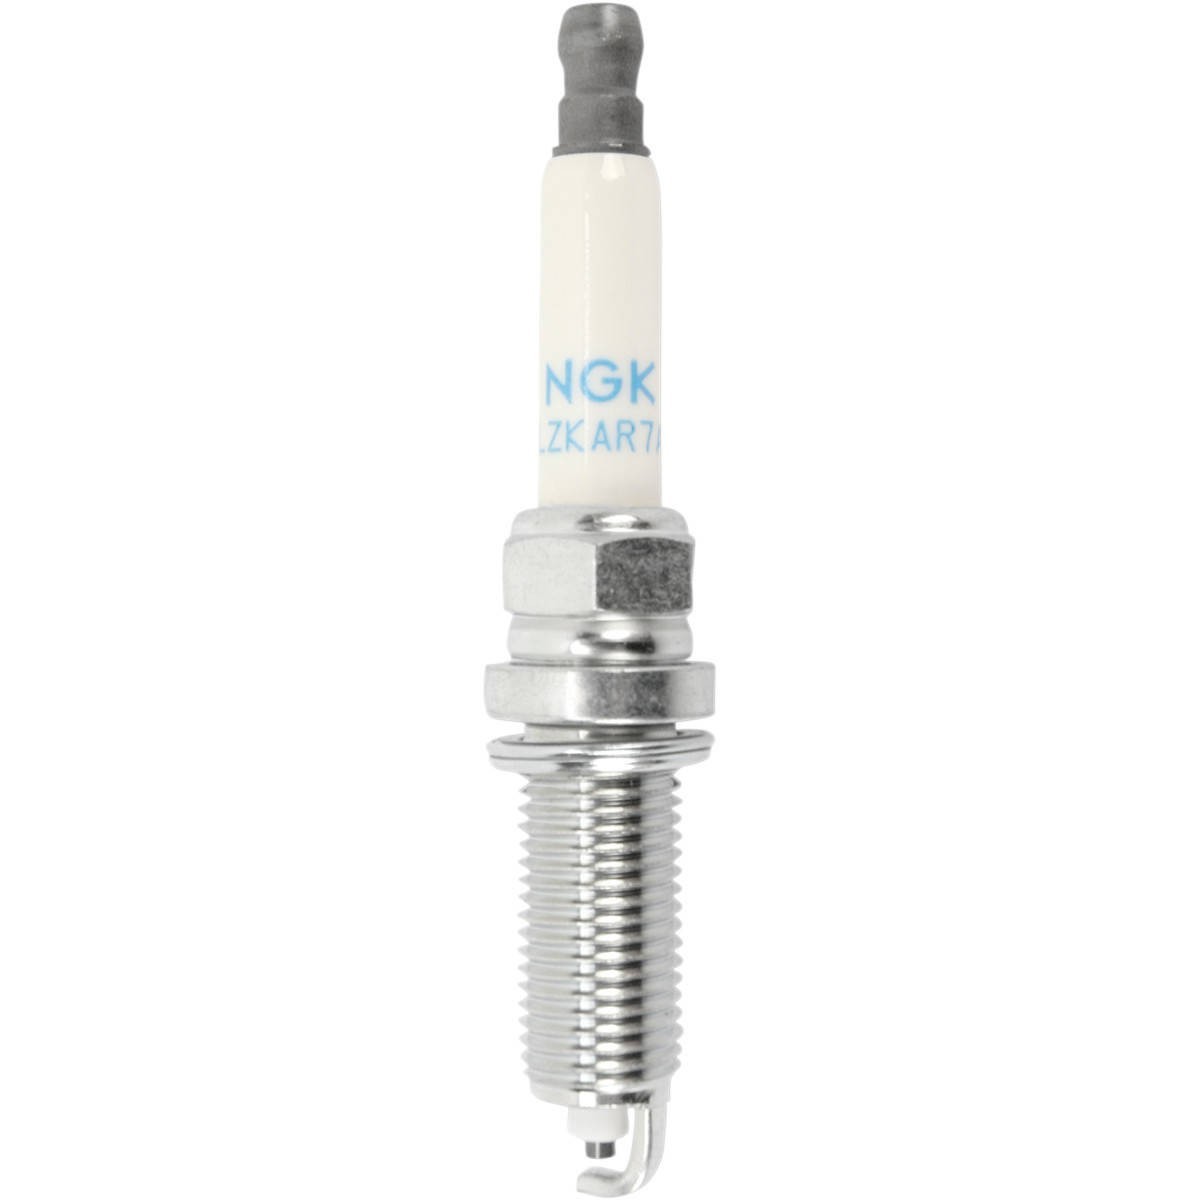 NGK (6799) LZKAR7A (6799) Traditional Spark Plug, Pack of 1